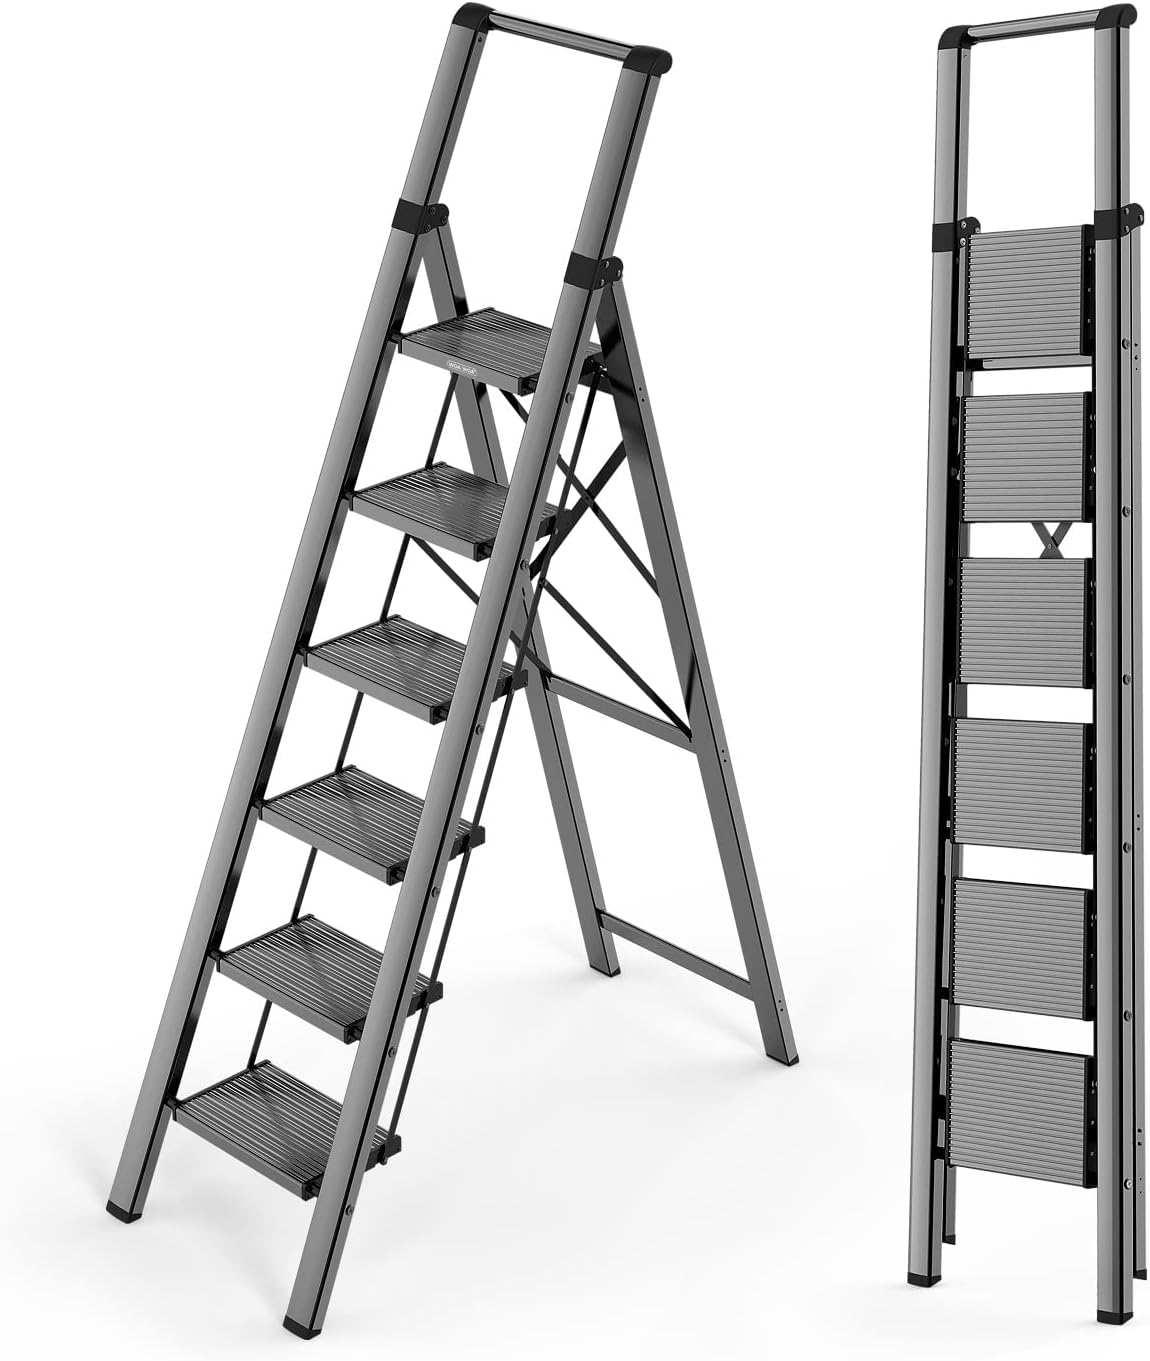 WOA WOA 6 Step Ladder, Lightweight Foldable Ladder [...]